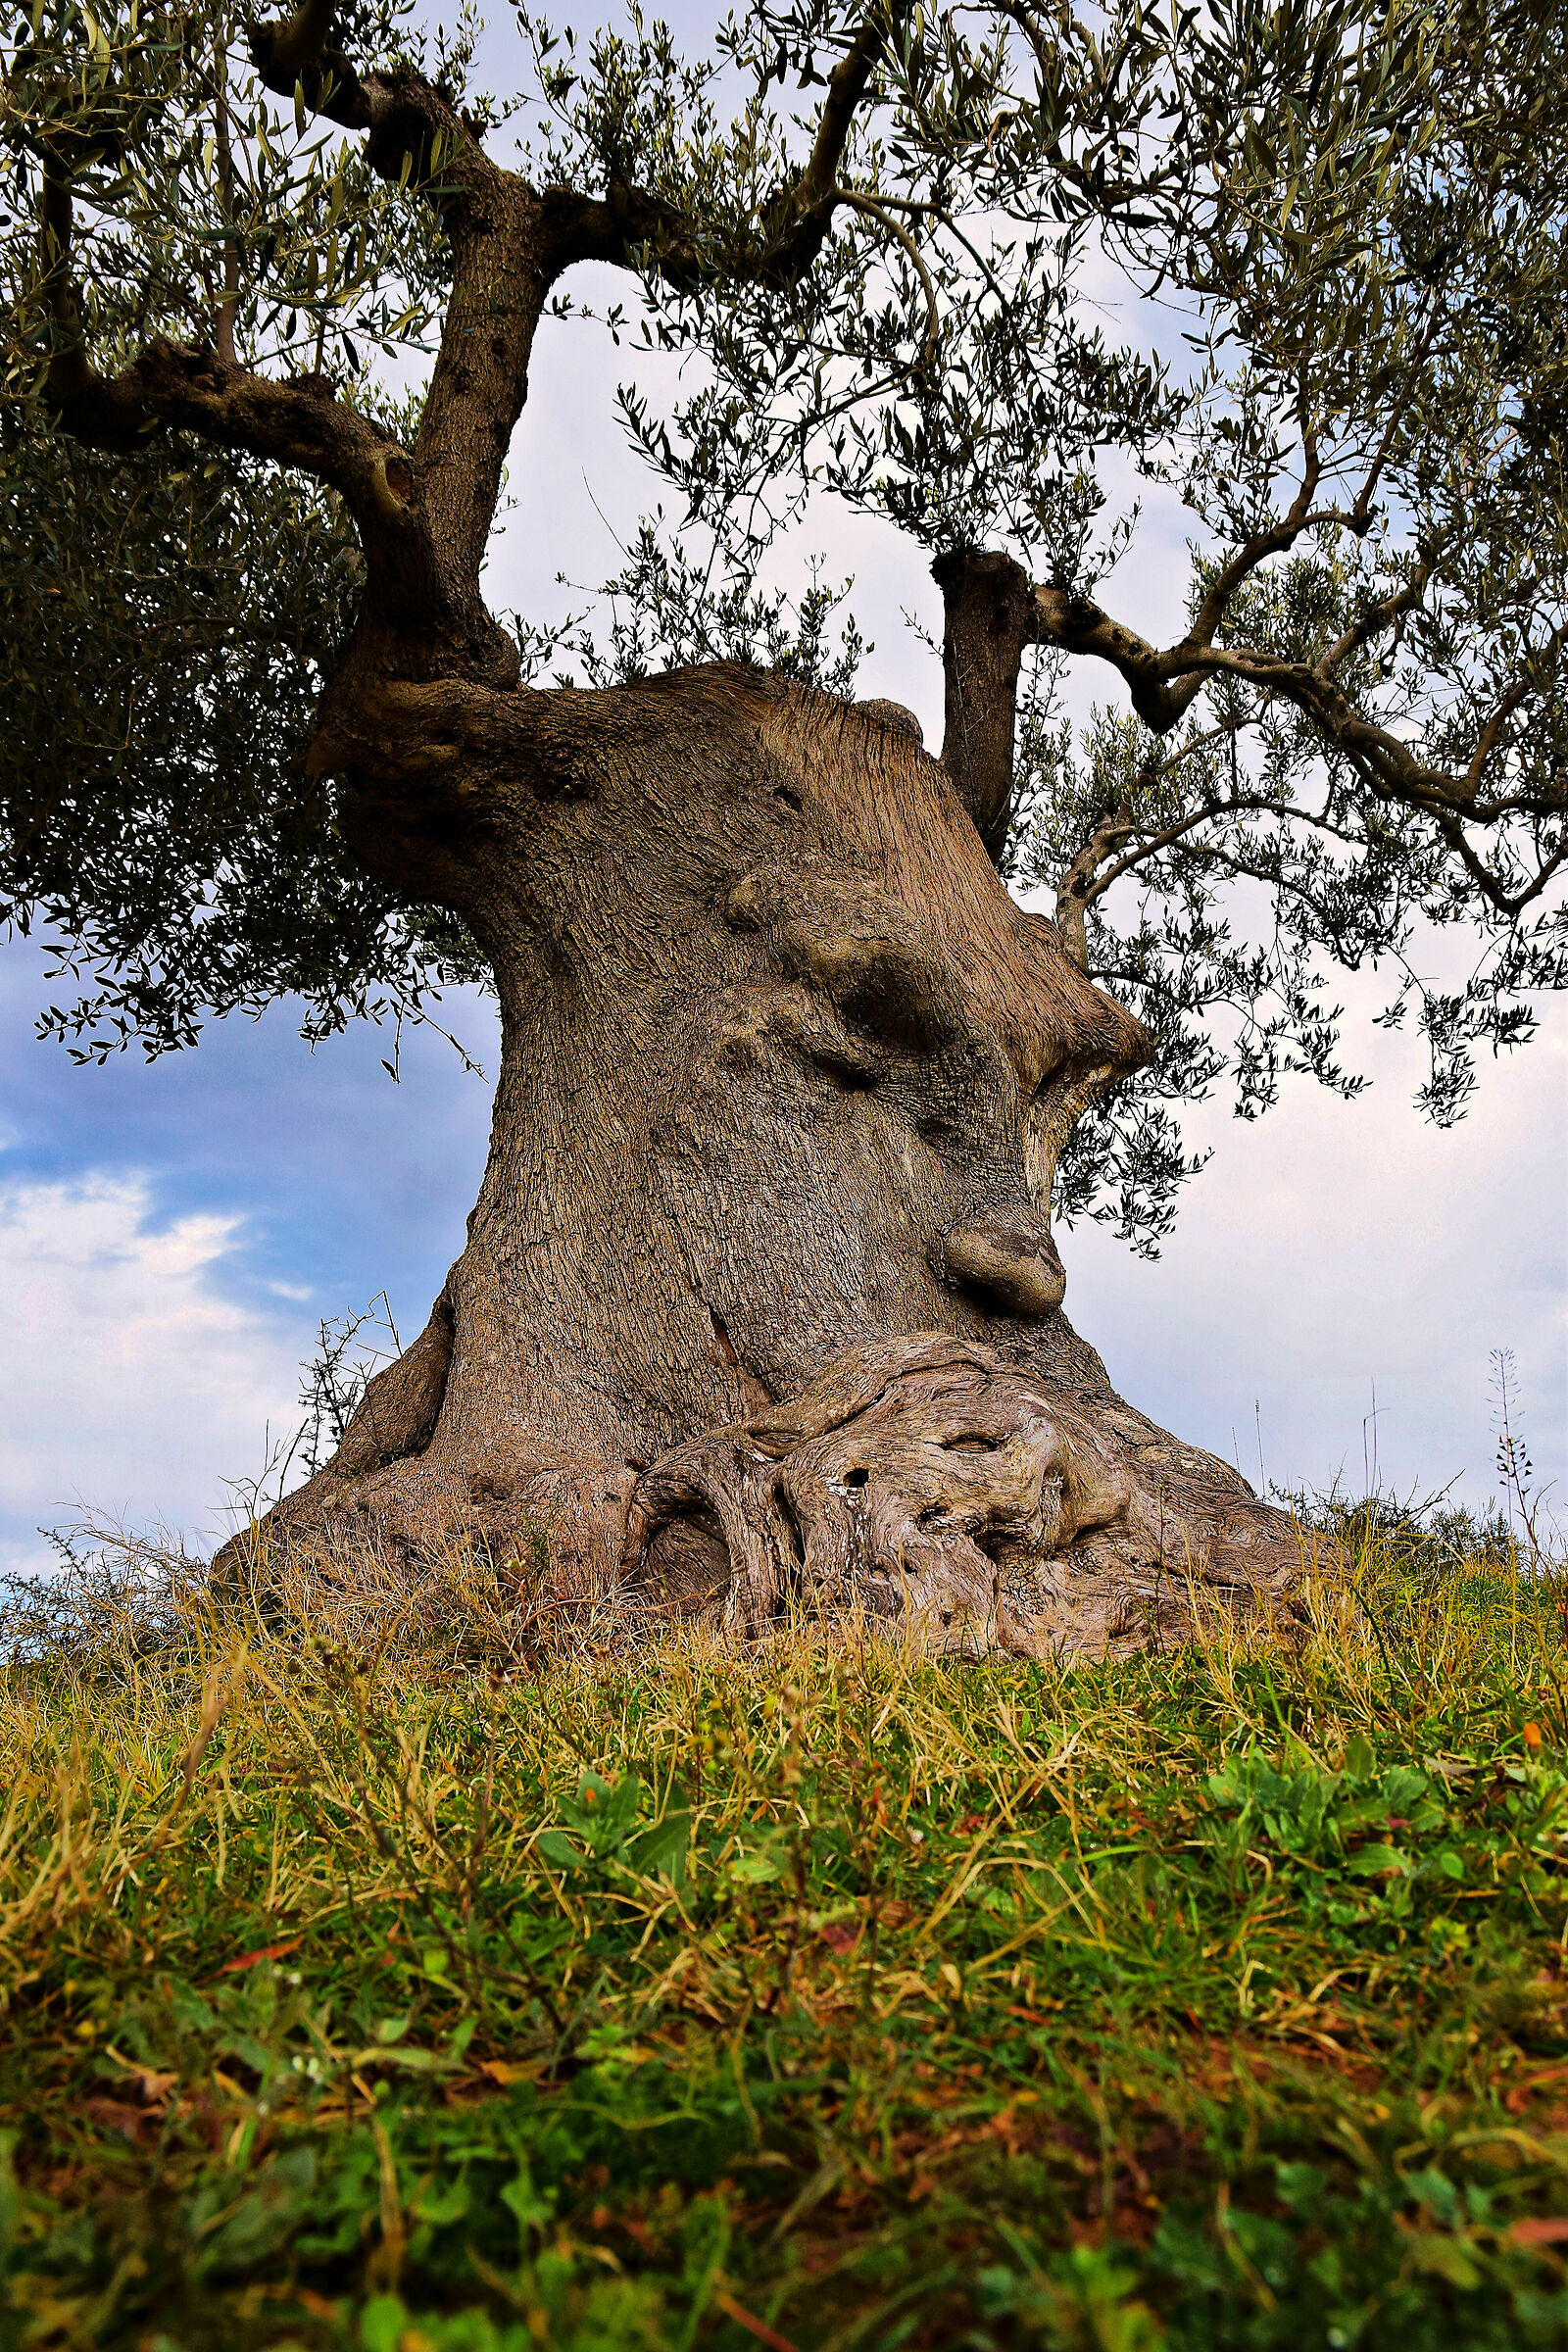 Thinking olive tree...